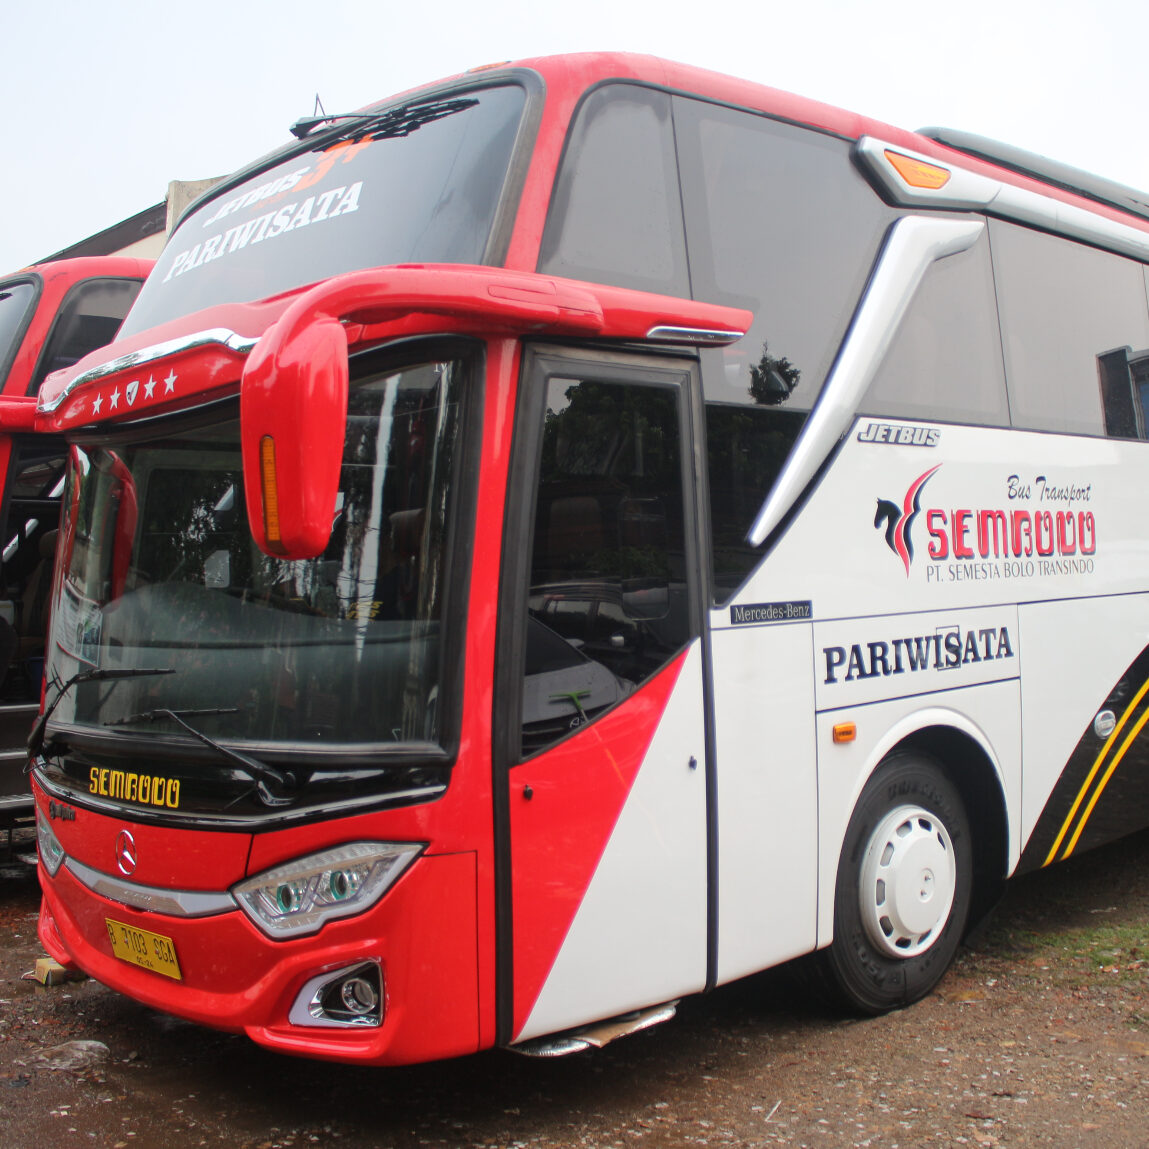 Agen Penjualan tiket bus Sembodo tersebar di Padang, Jakarta, Banten hingga. Sumber: Gmaps/Pool Bus Pariwisata Sembodo.